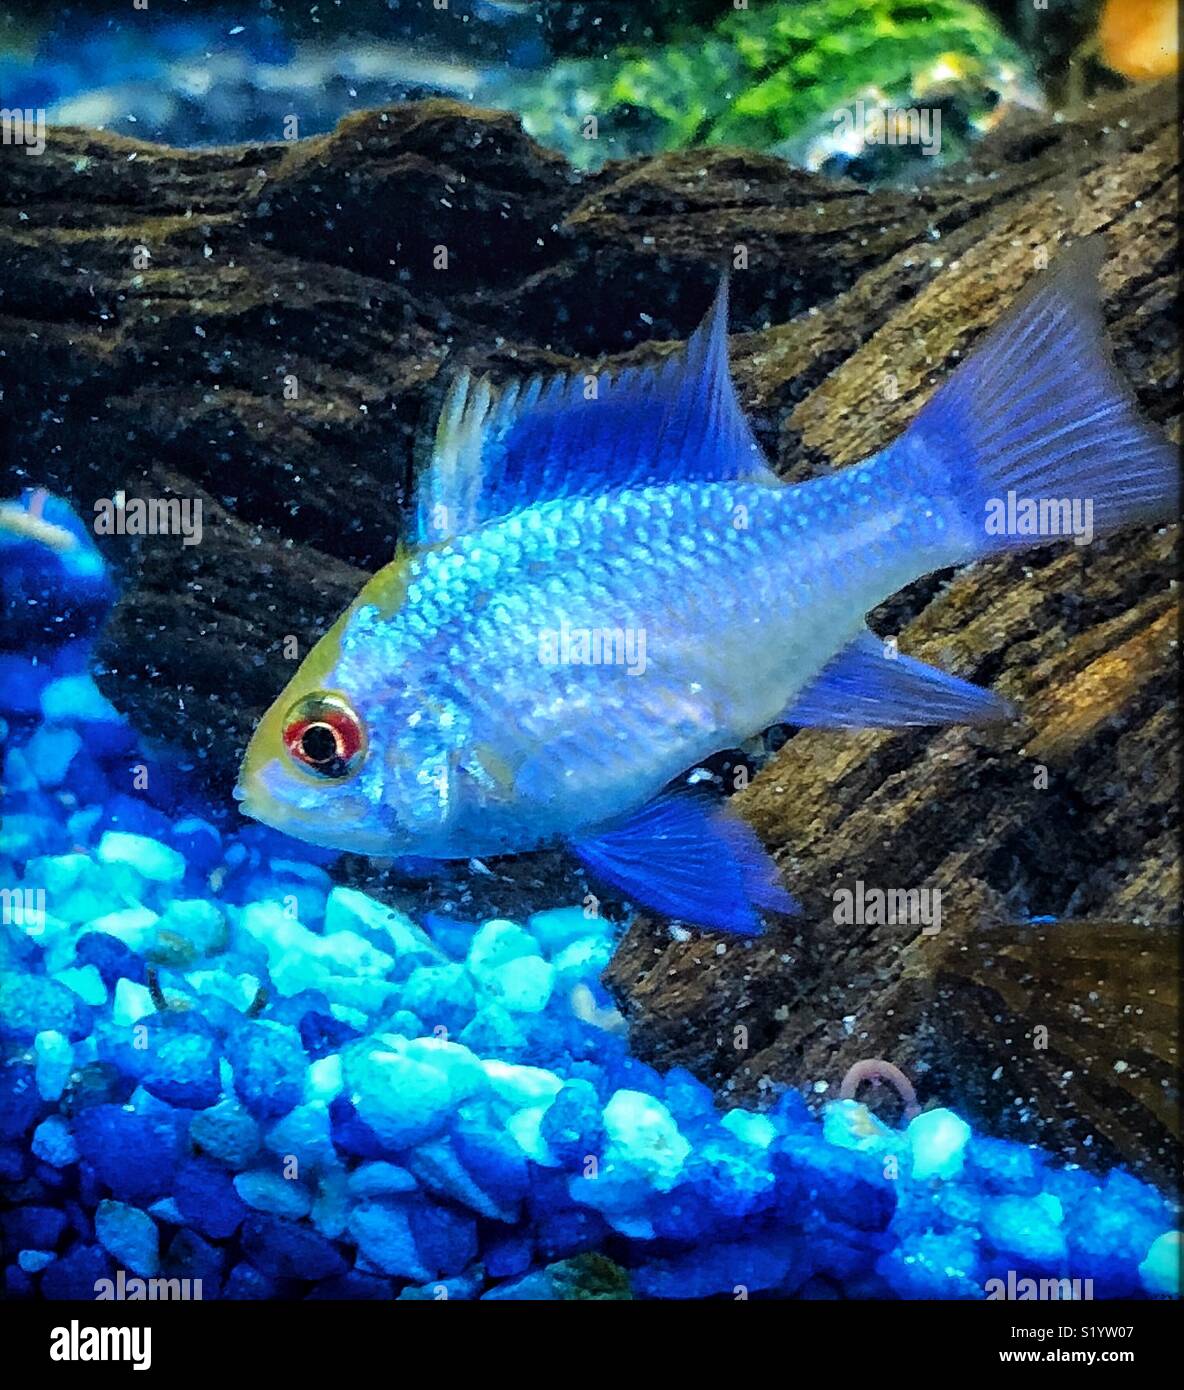 Electric Blue Ram Tropical Fish Stock Photo